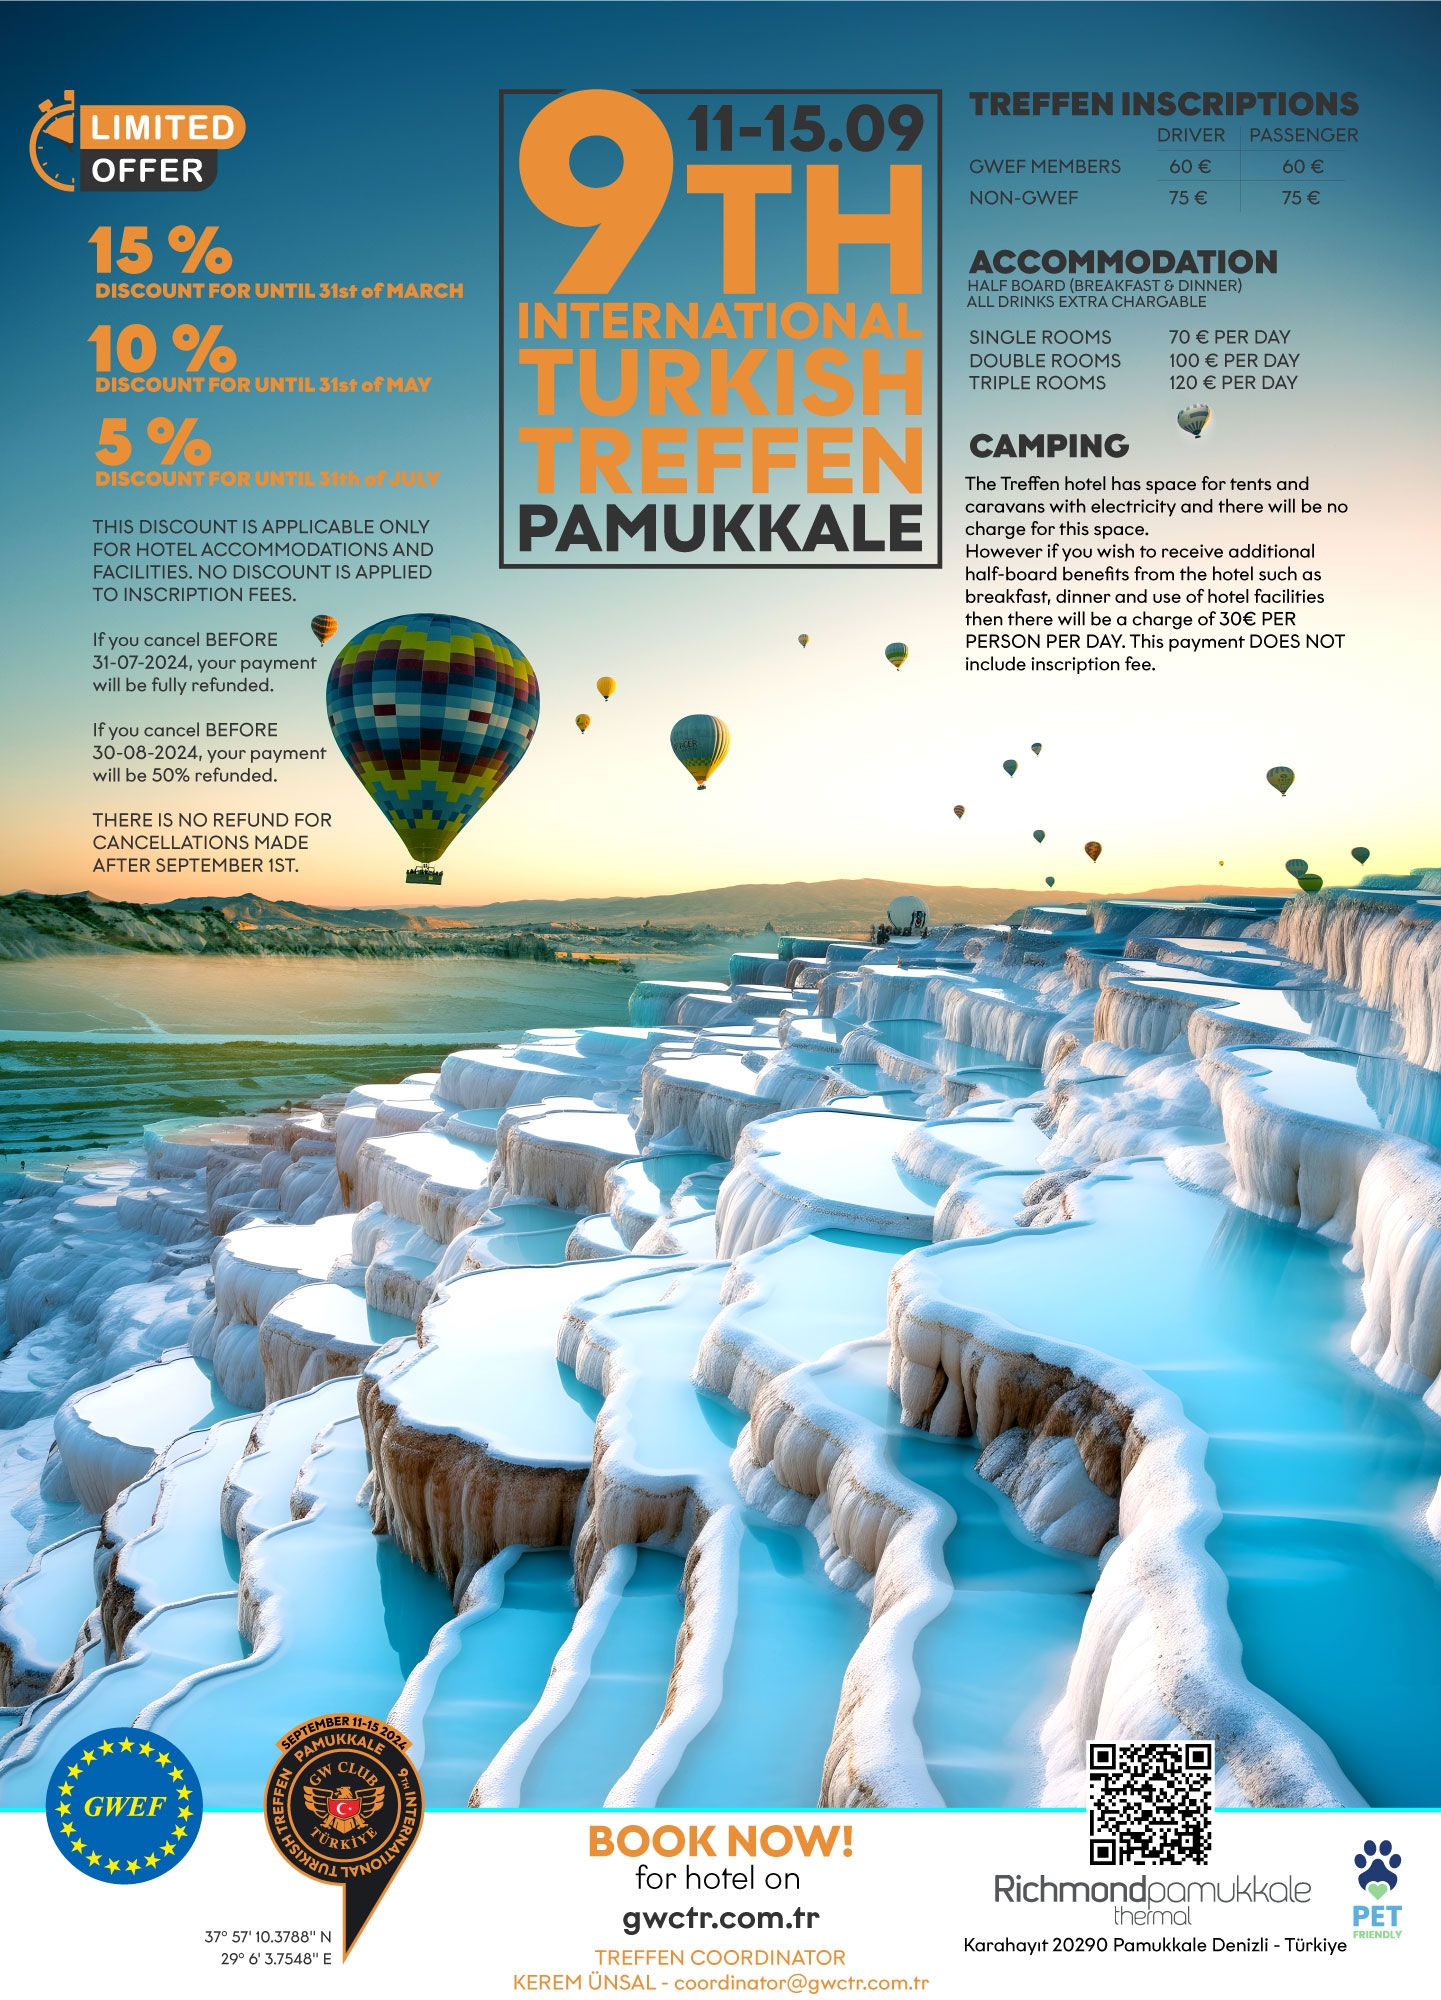 9th INTERNATIONAL TURKISH TREFFEN - PAMUKKALE